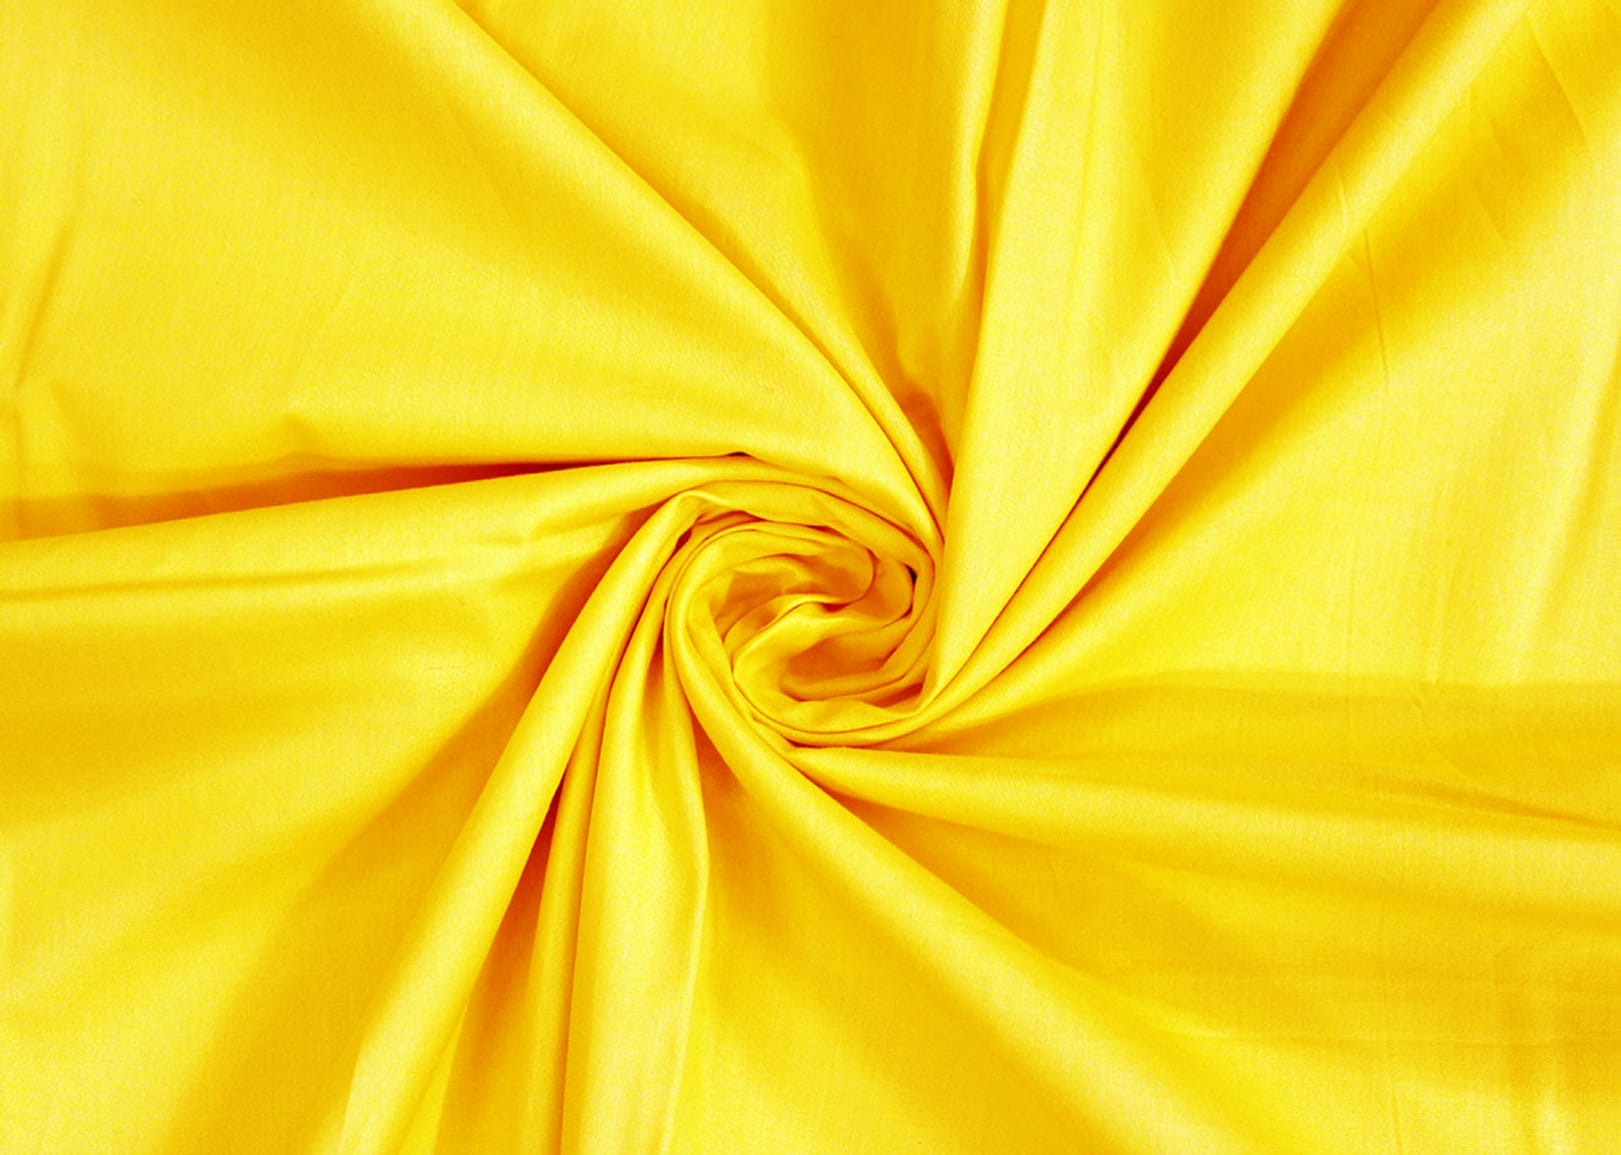 Plain Cotton 210 TC Designer Bedsheet - Yellow At Best Prices